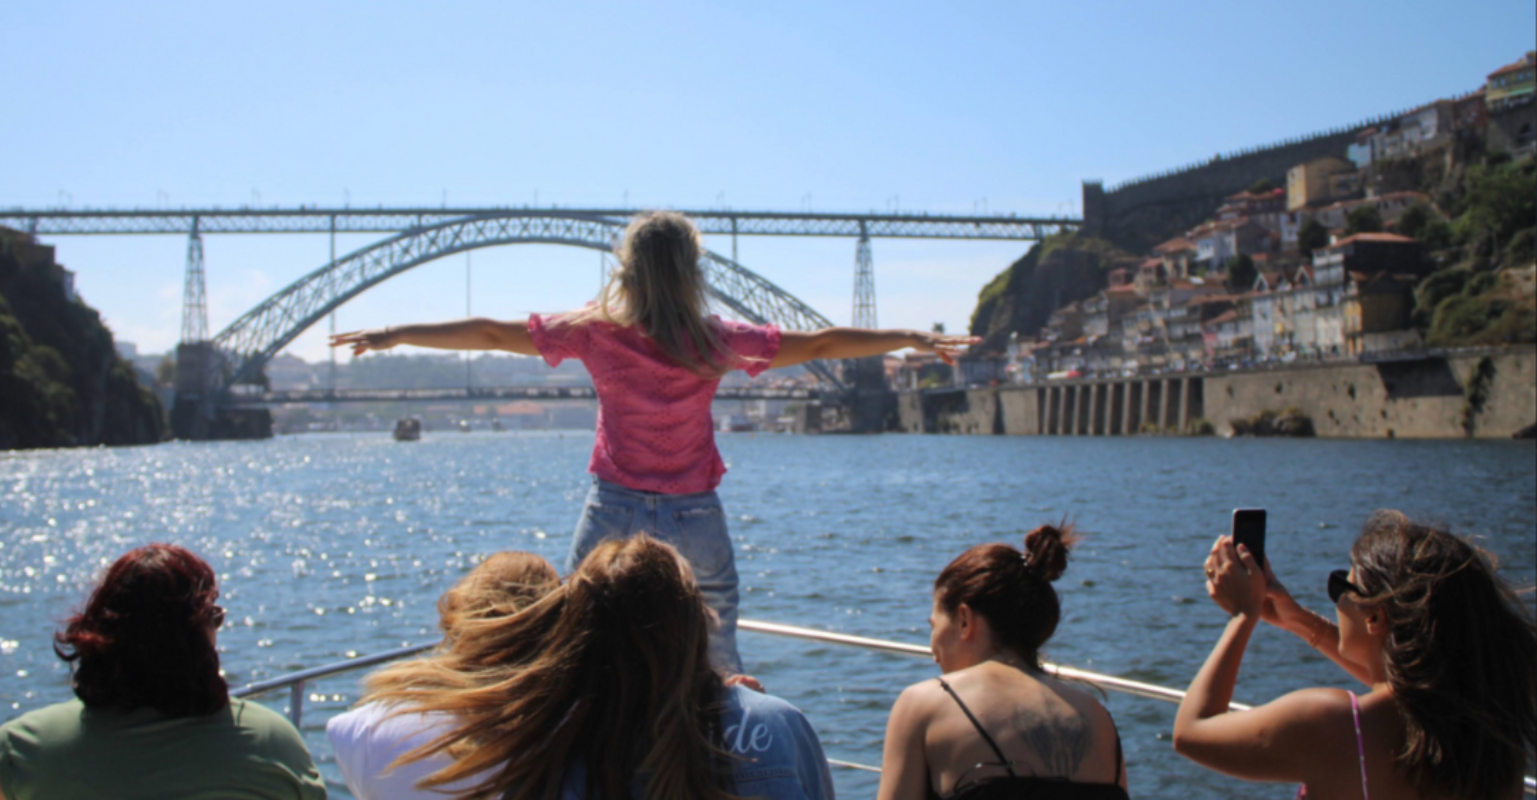 6 Bridges cruise with port wine tasting